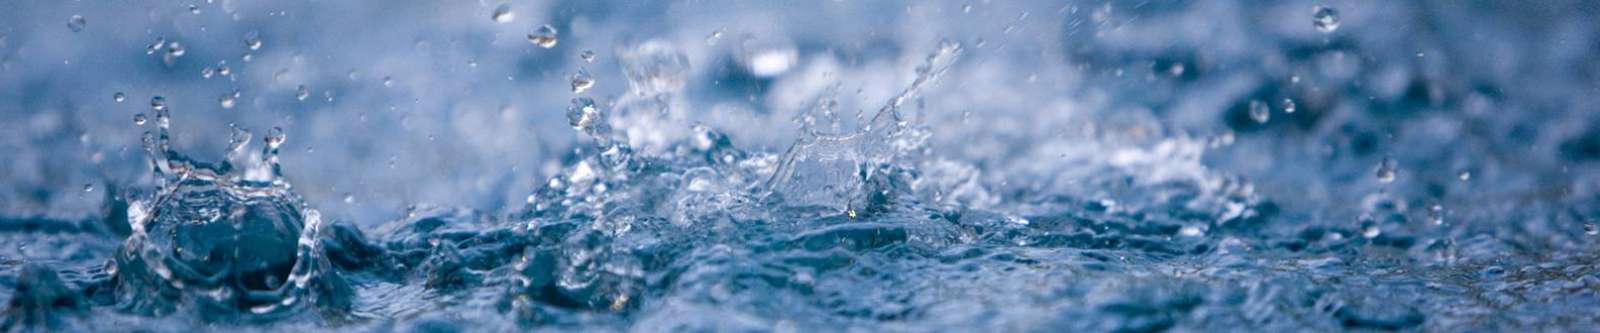 Commercial Water Management & Rainwater Harvesting